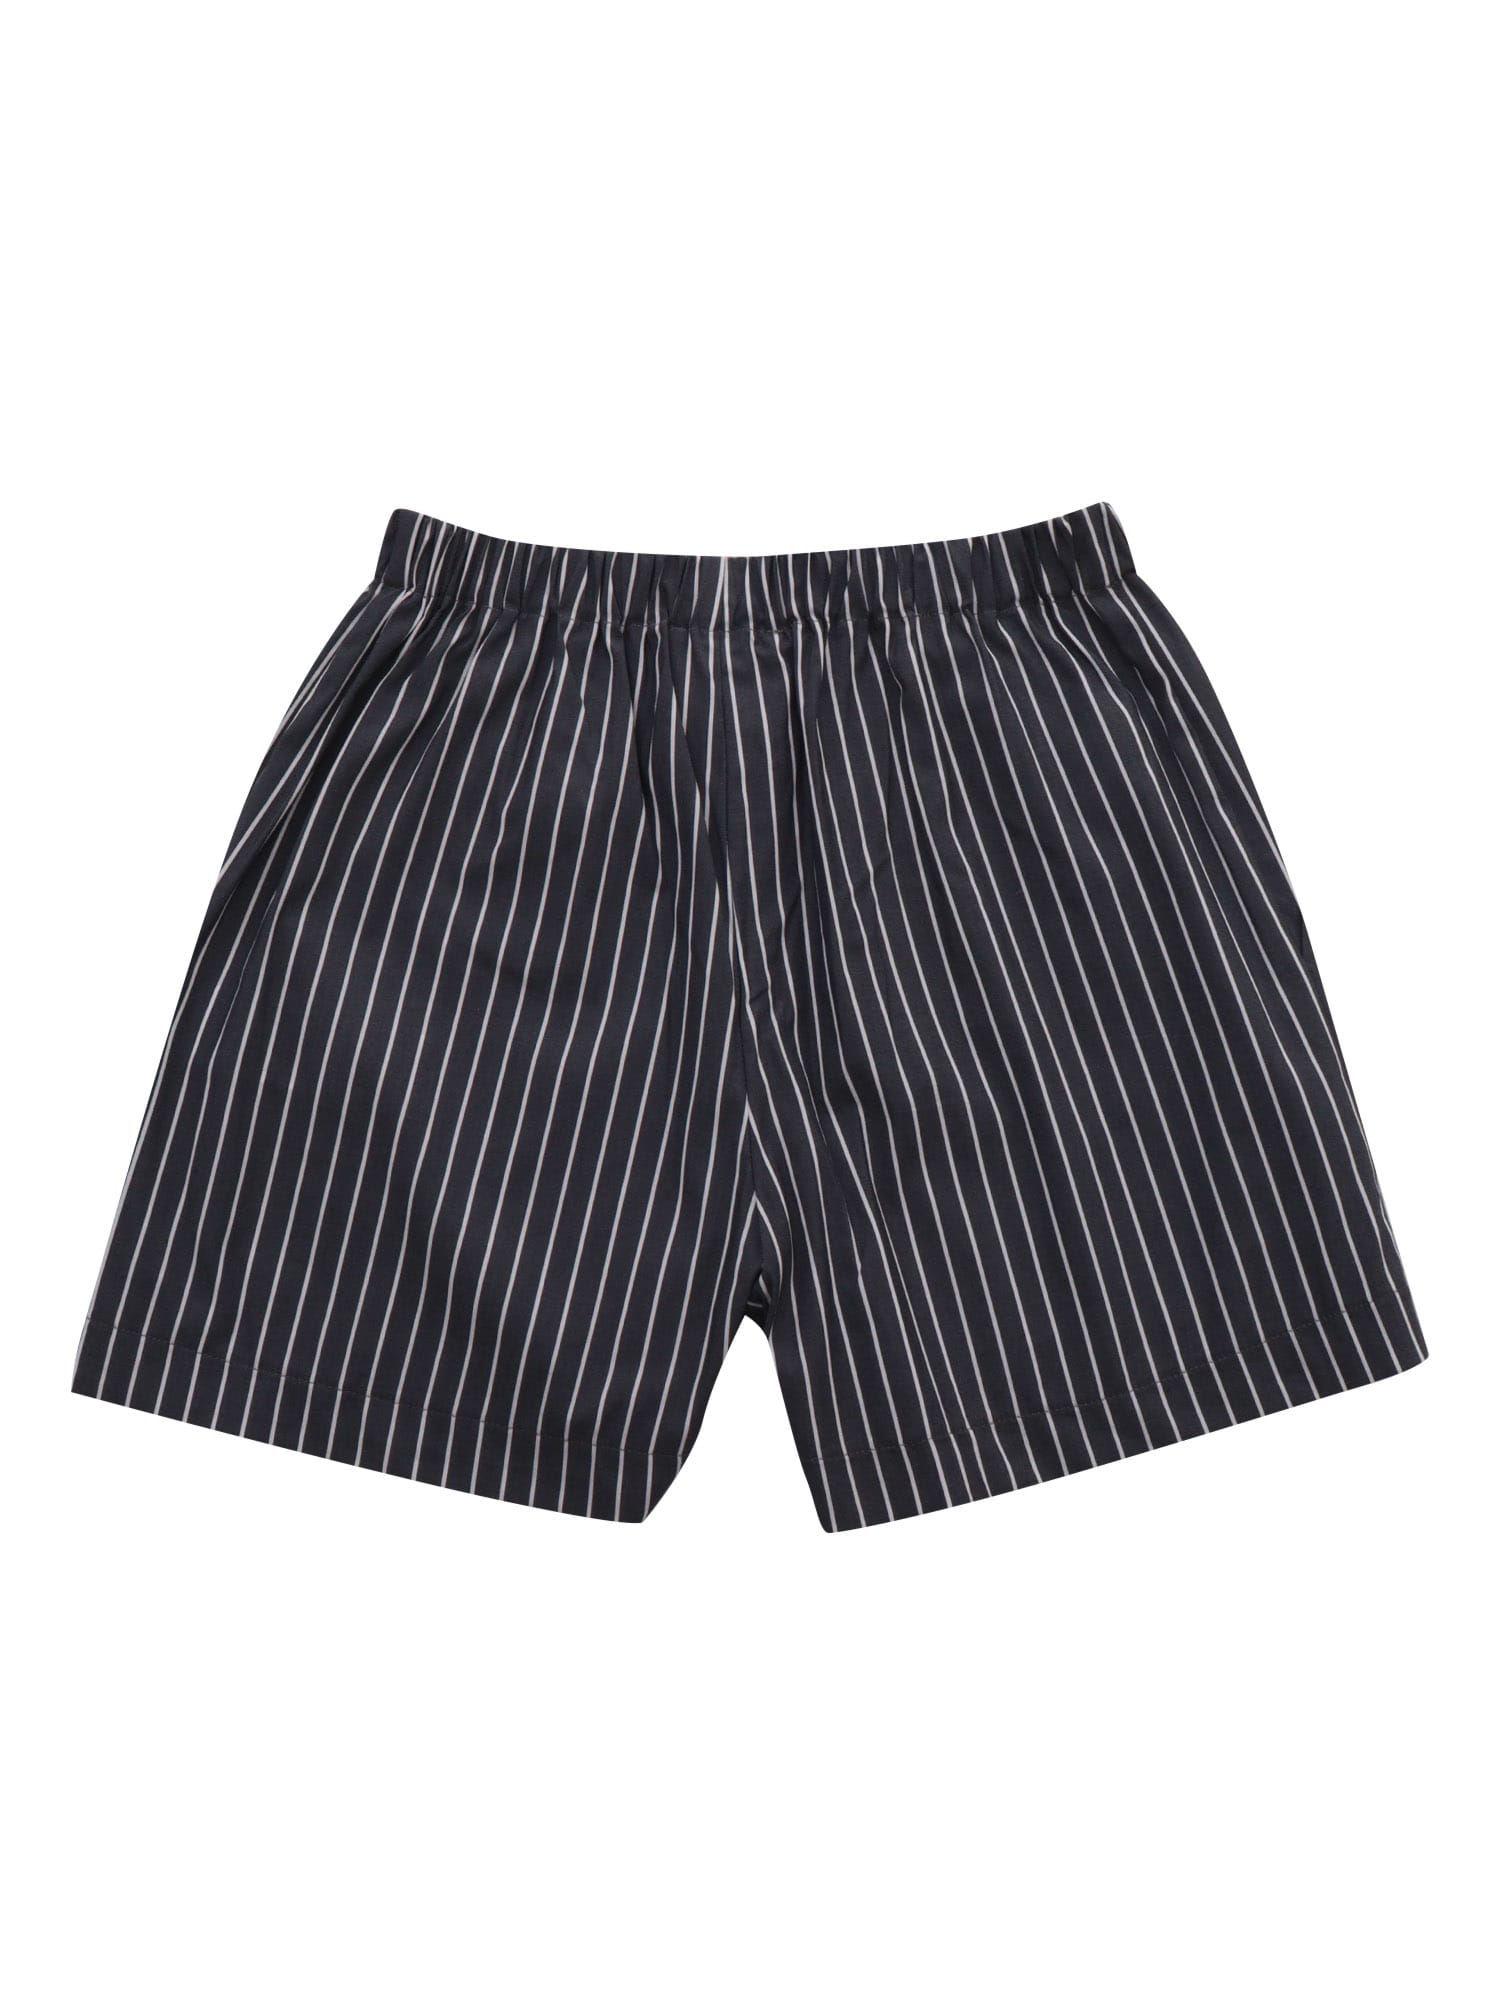 Shop Douuod Black Striped Shorts